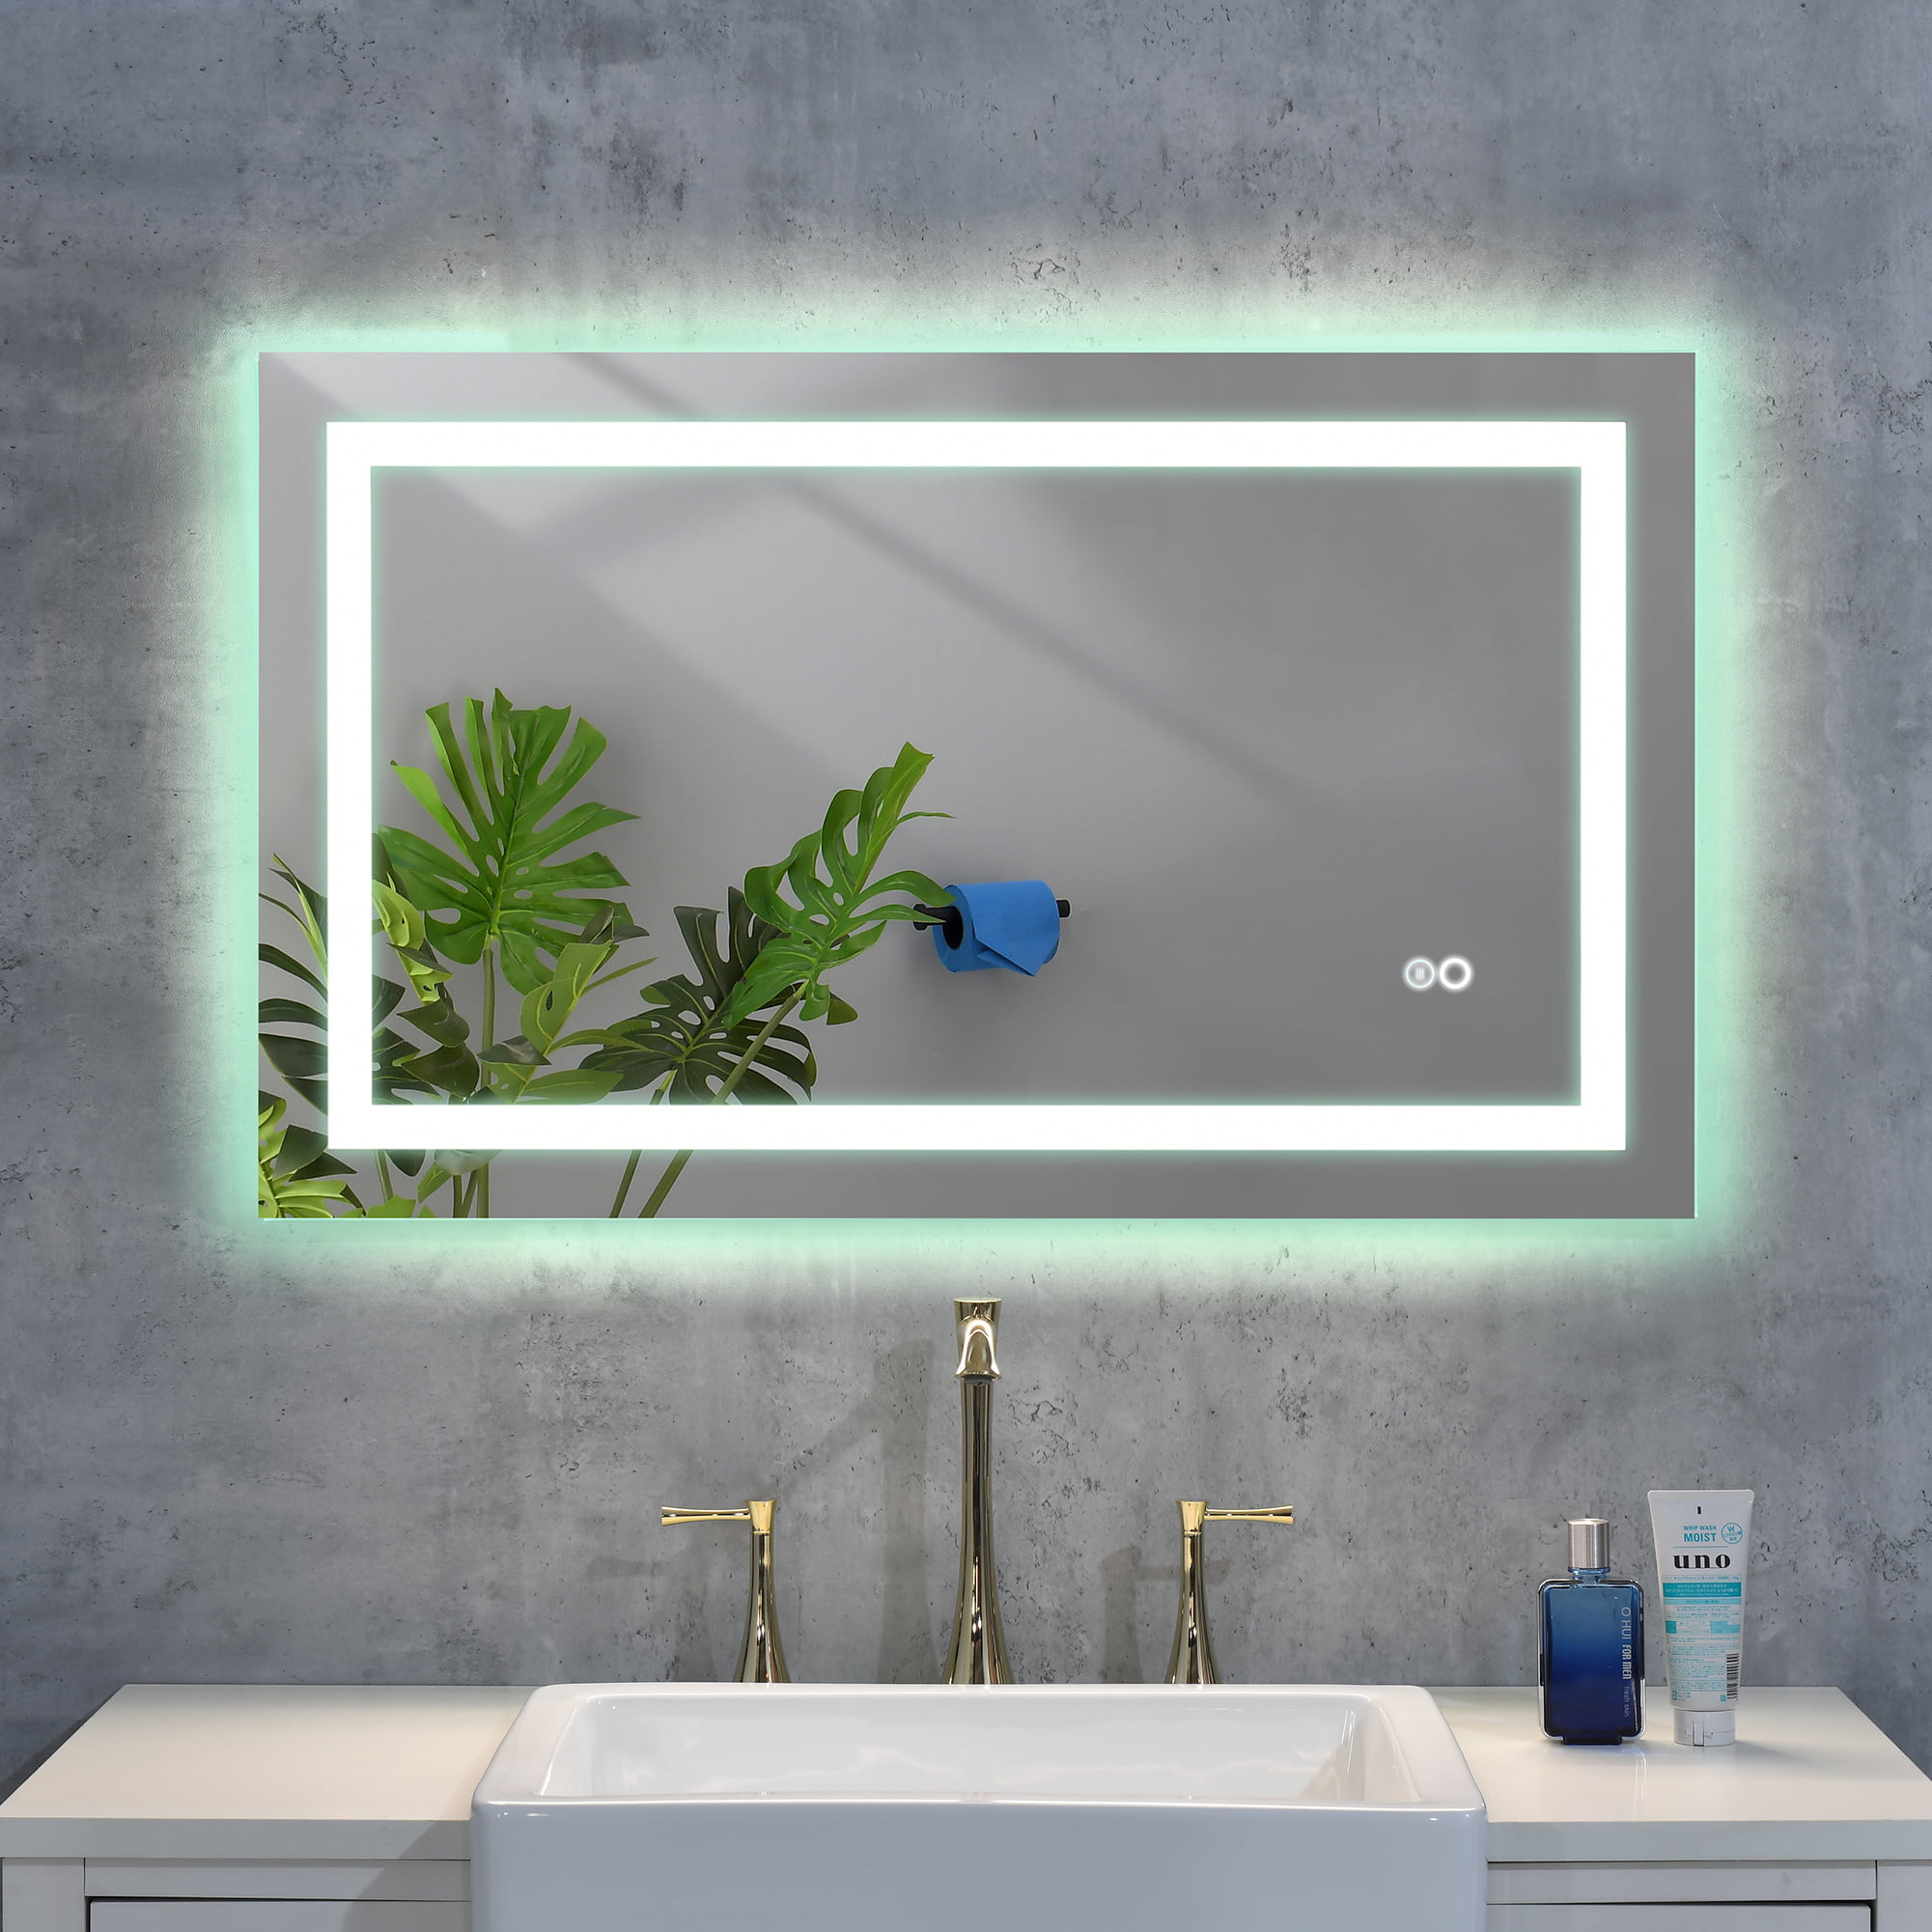 QHCS Mirror Light LED Mirror Light Bathroom Wall Lantern 10W 40cm Picture  Painting Lamp Ultra-Bright…See more QHCS Mirror Light LED Mirror Light